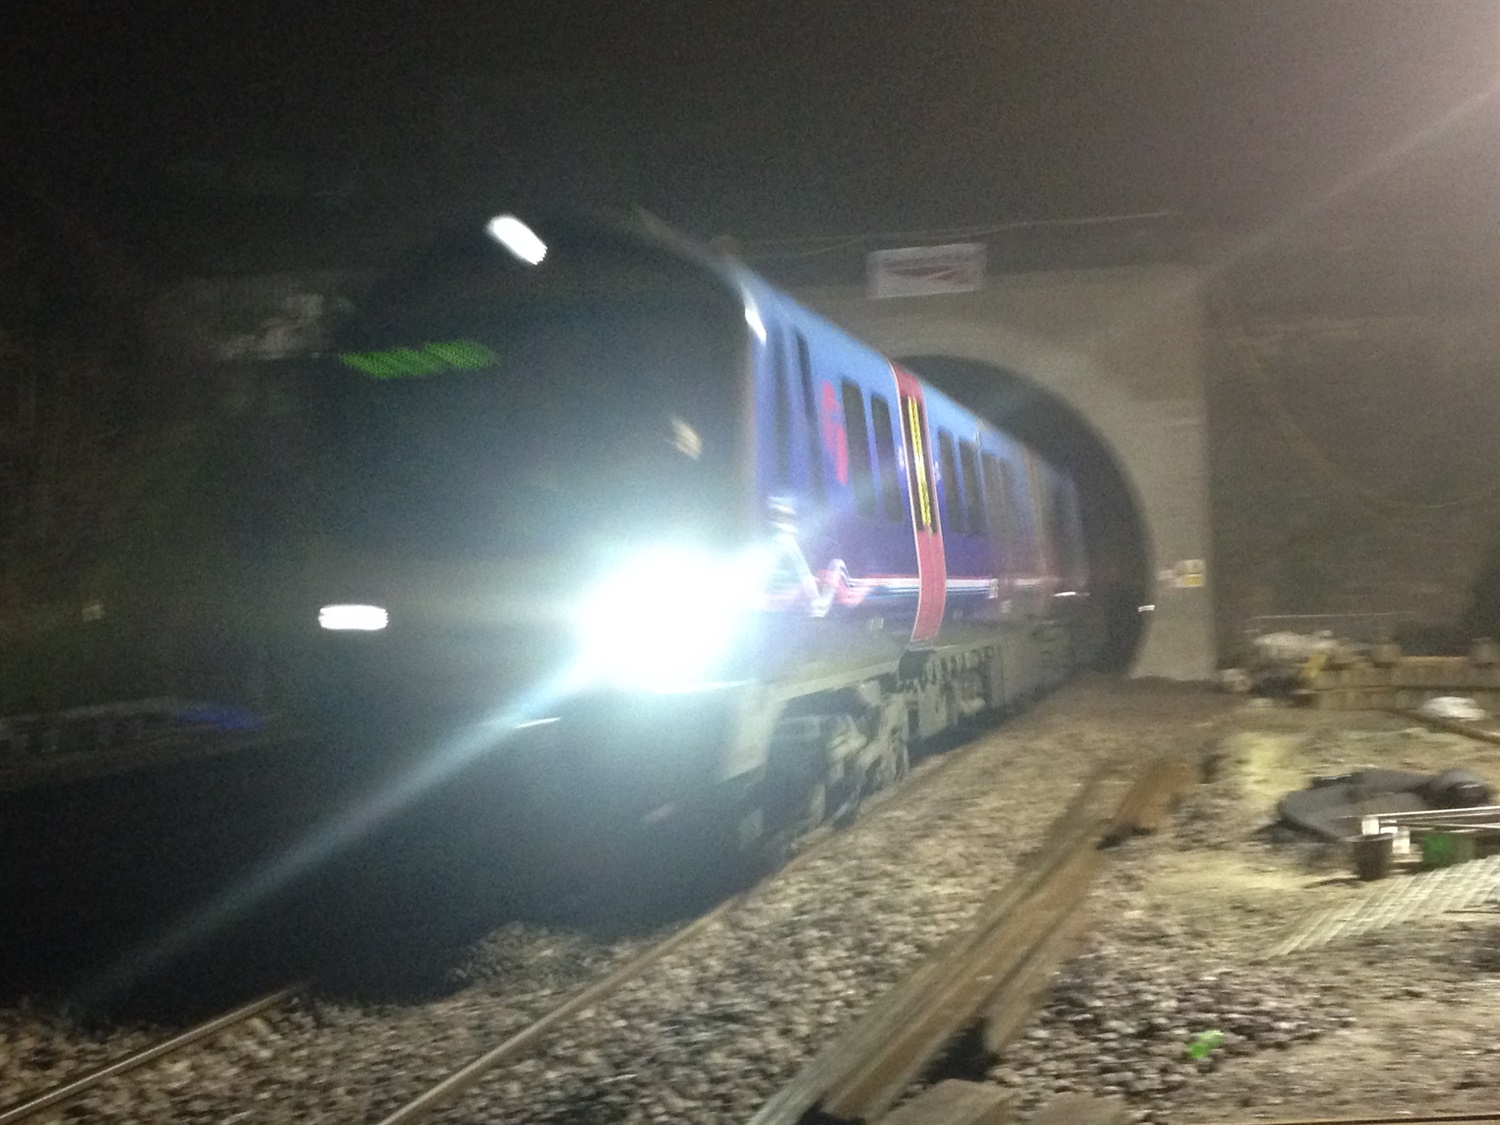 Rail services resume through Farnworth Tunnel 